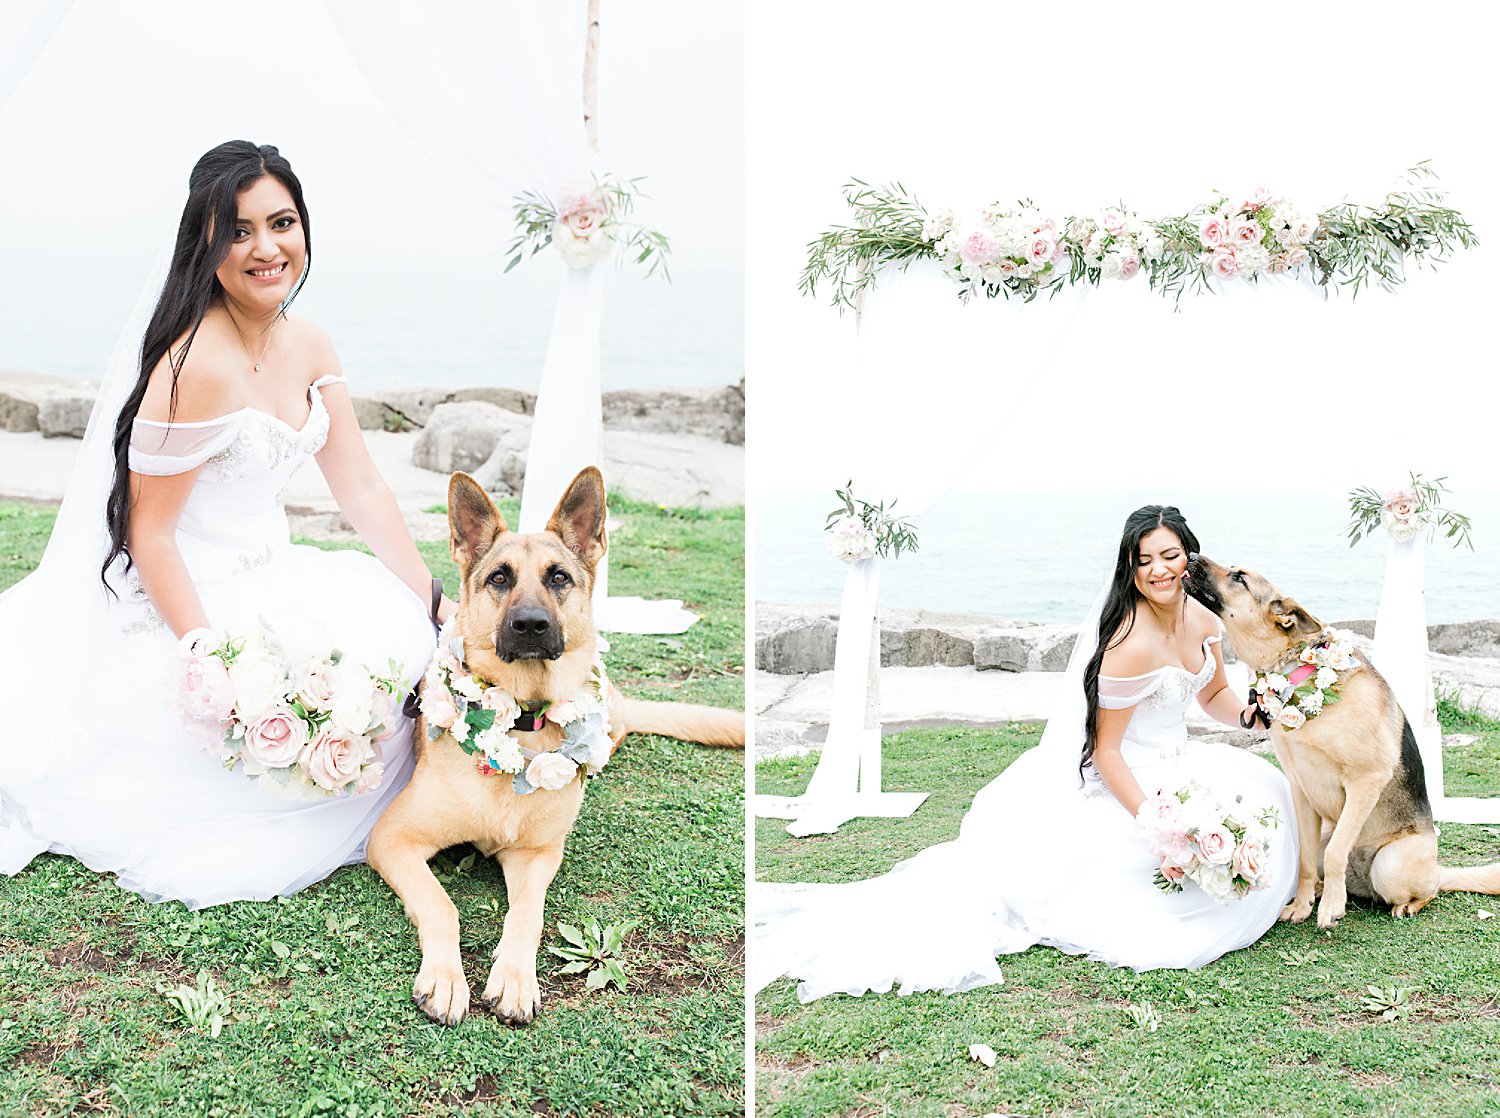 Brenda & Alex's Wedding » Denise Espinosa Photography